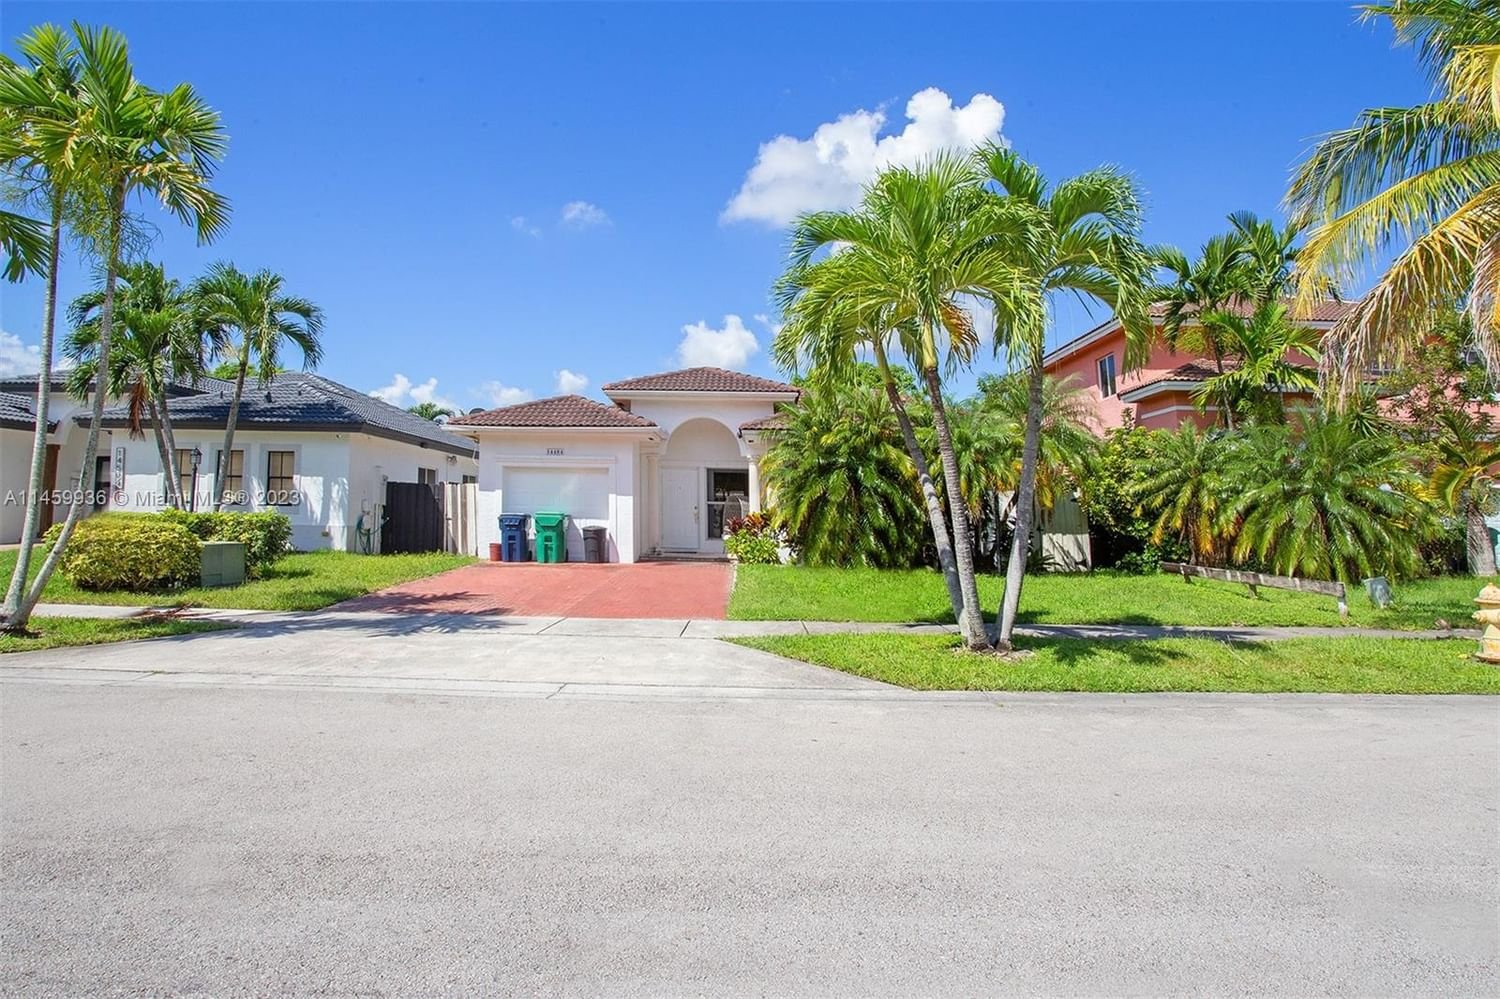 Real estate property located at 14484 158th Ct, Miami-Dade County, Miami, FL